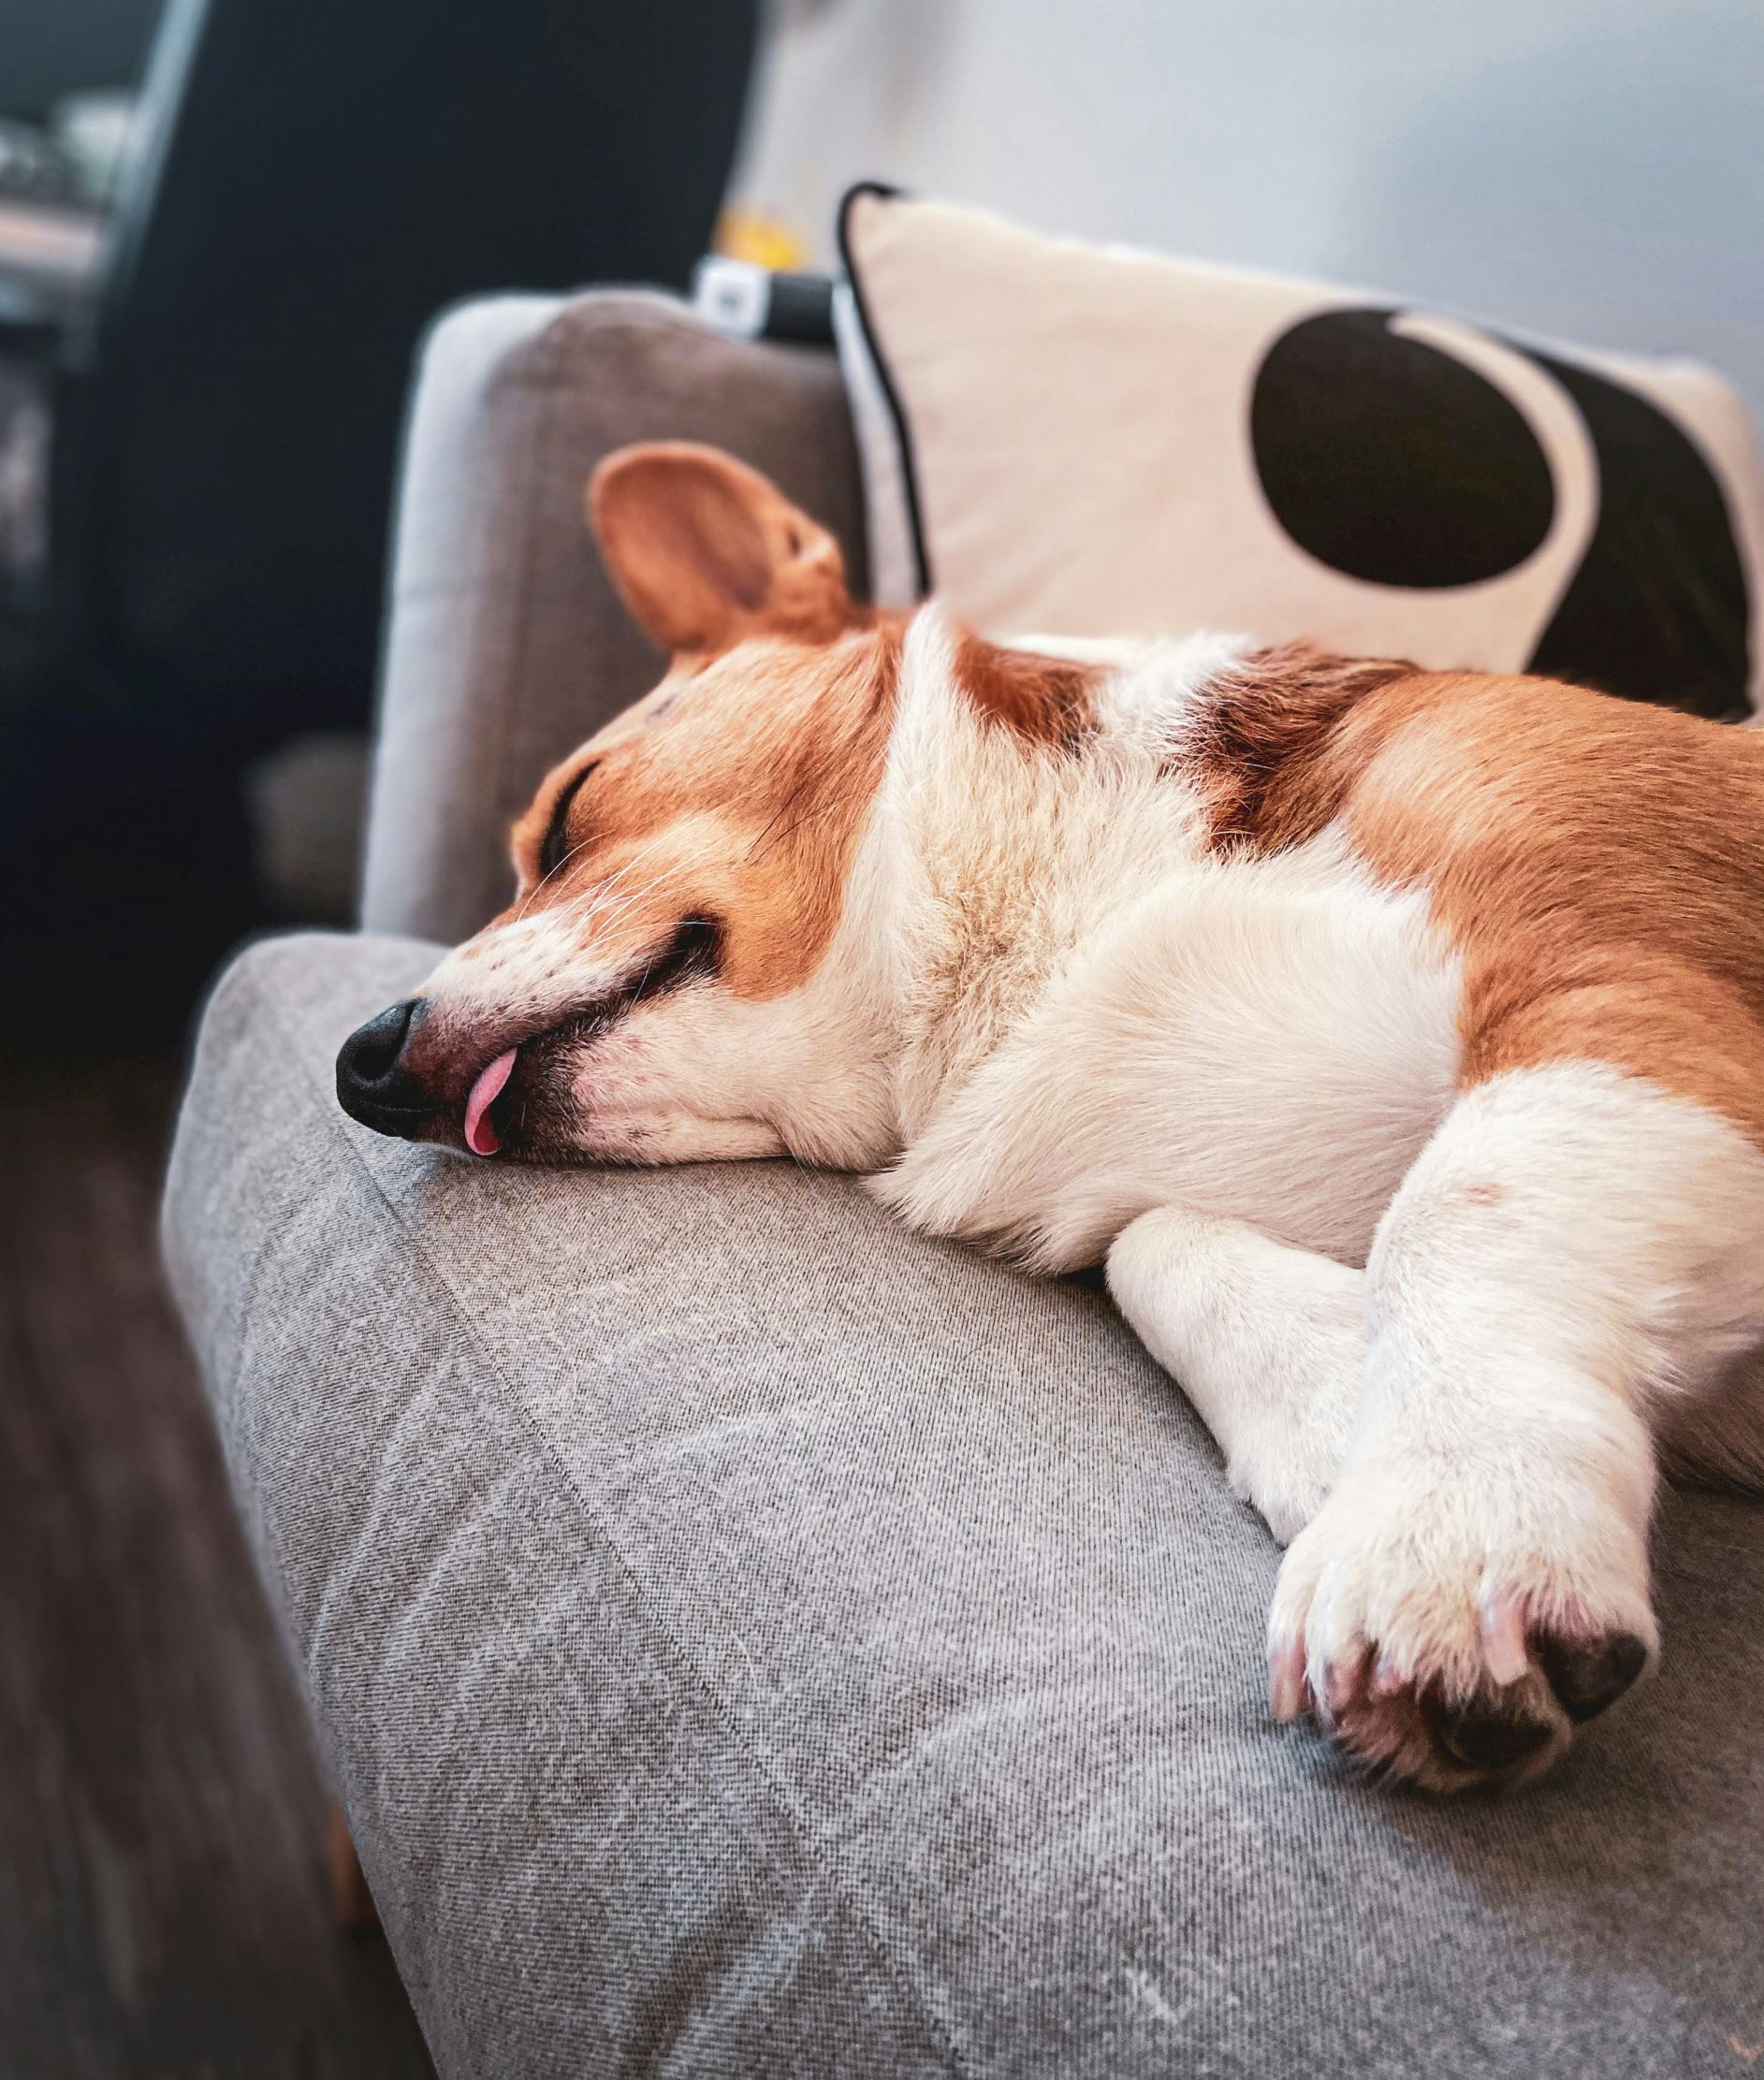 how long should a dog sleep for